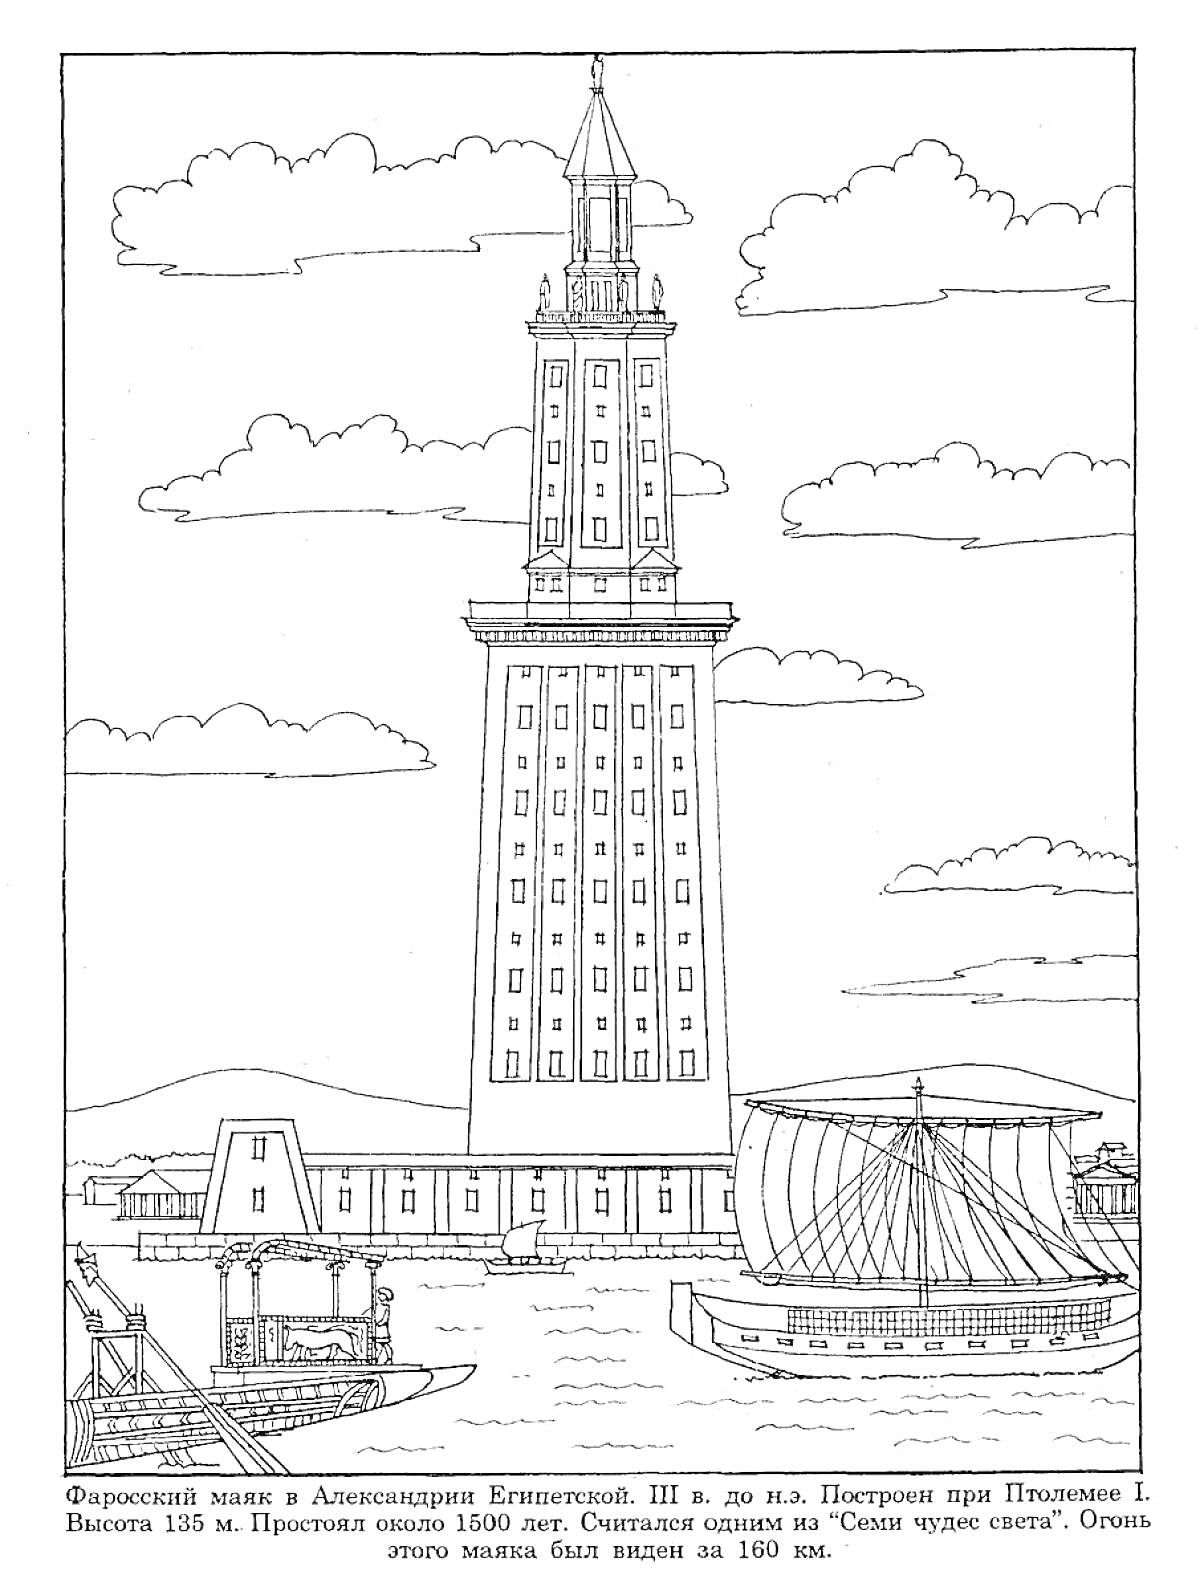  Фаросский маяк в Александрии с окружающими кораблями на причале и лодкой на переднем плане.